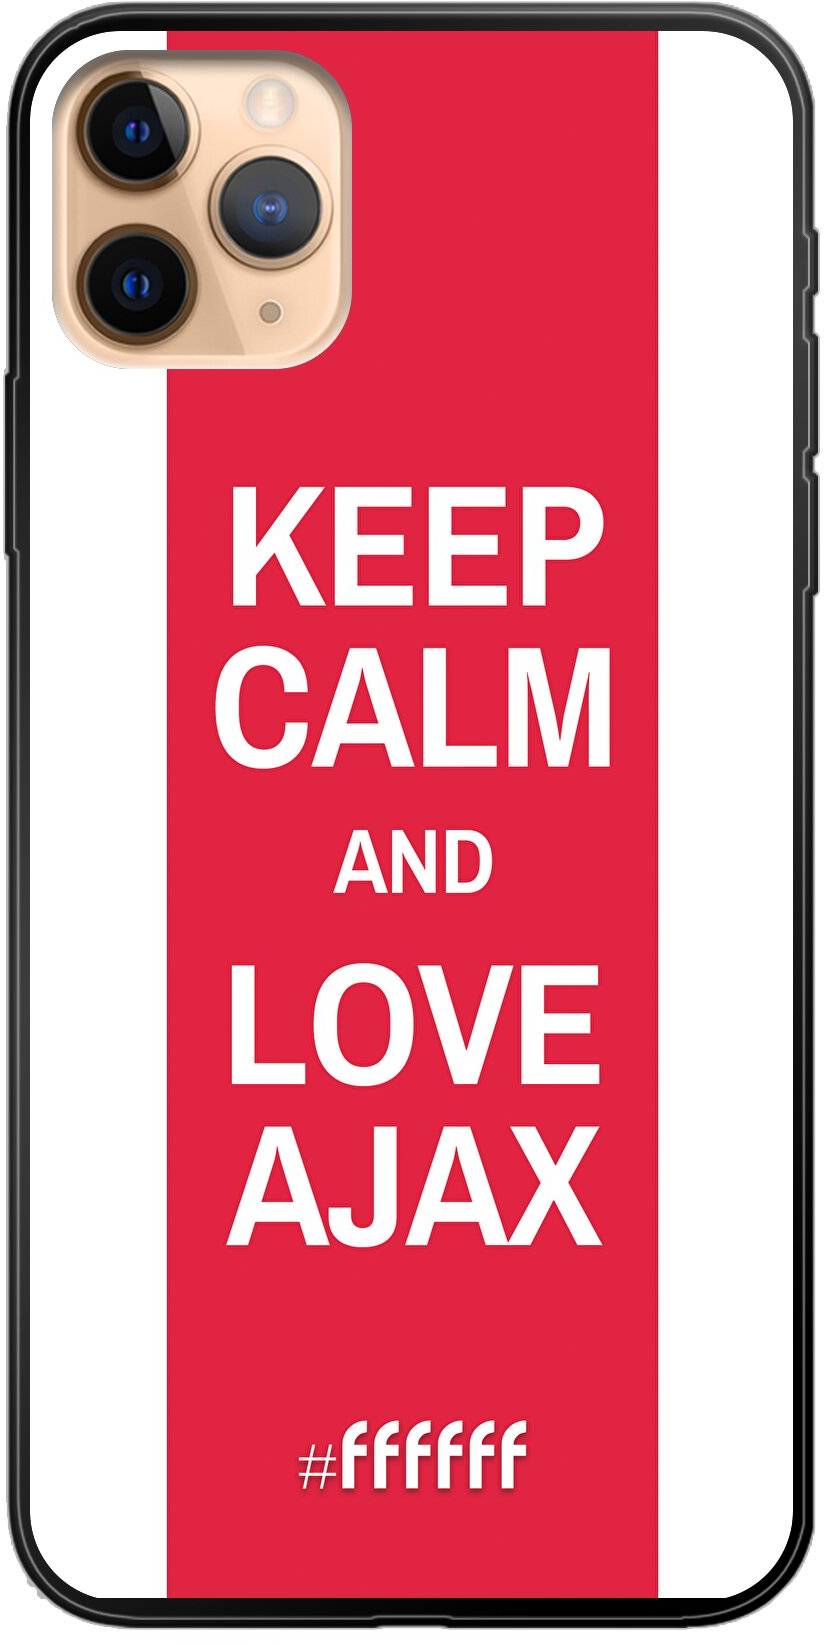 AFC Ajax Keep Calm iPhone 11 Pro Max